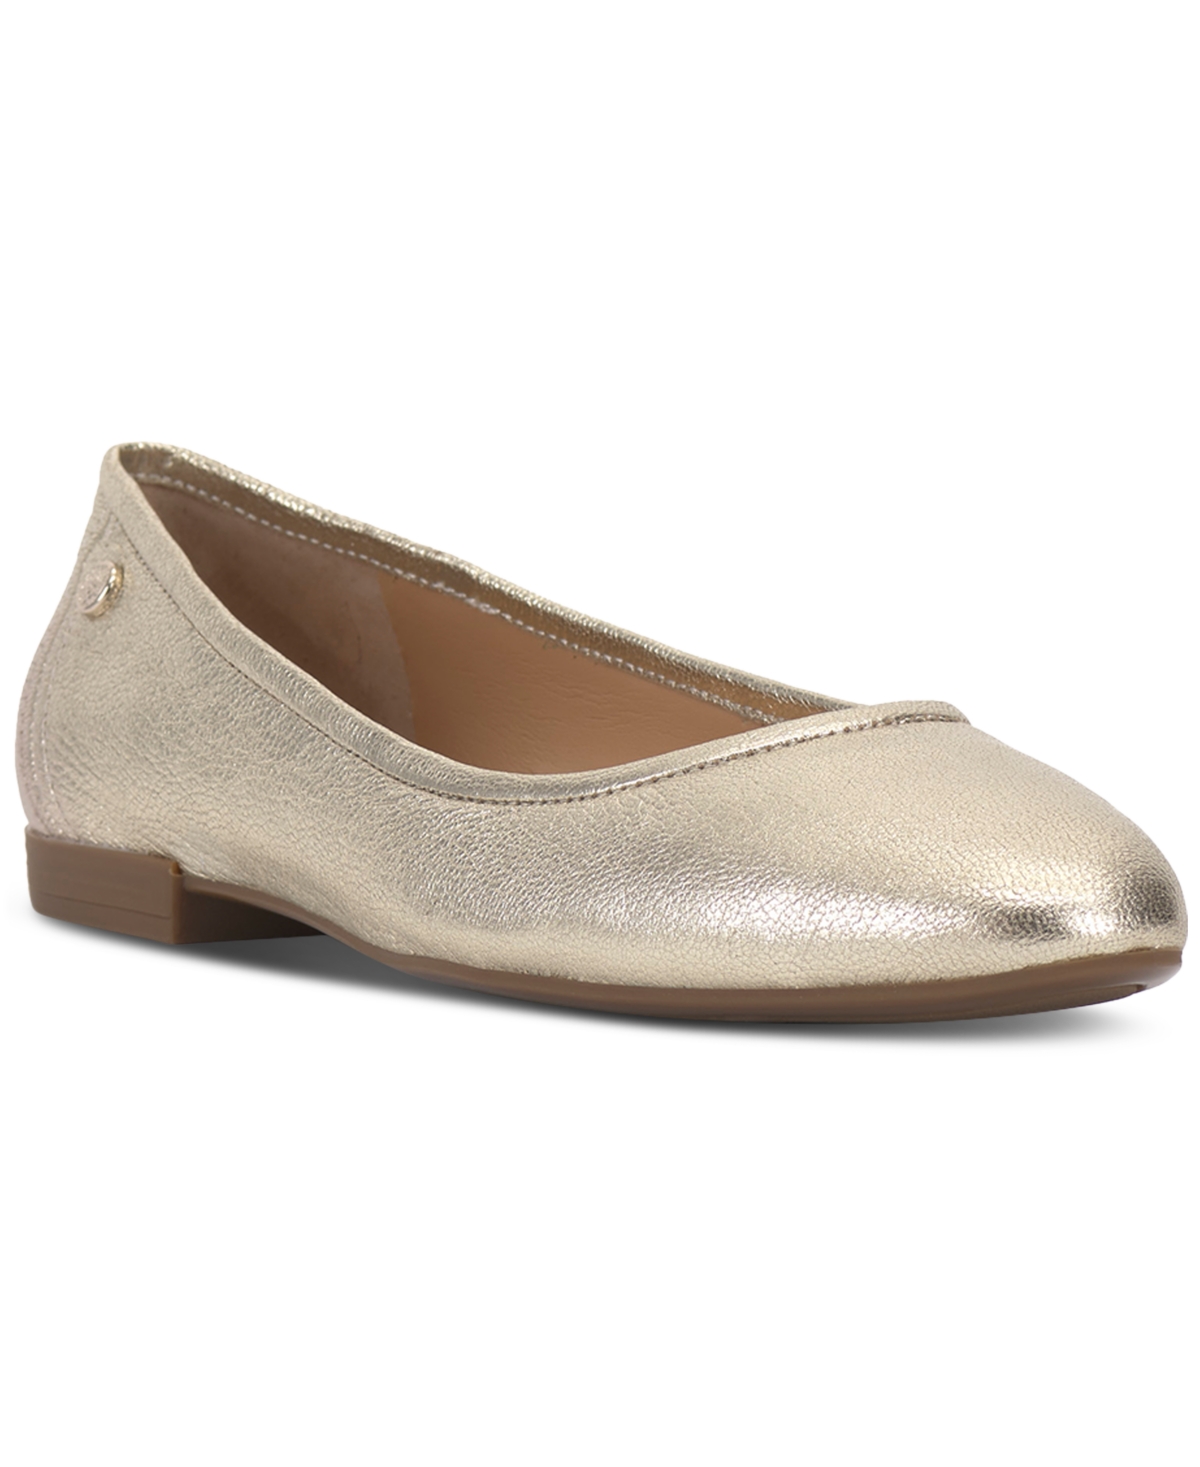 Women's Minndy Slip-On Ballet Flats - Light Gold Metallic